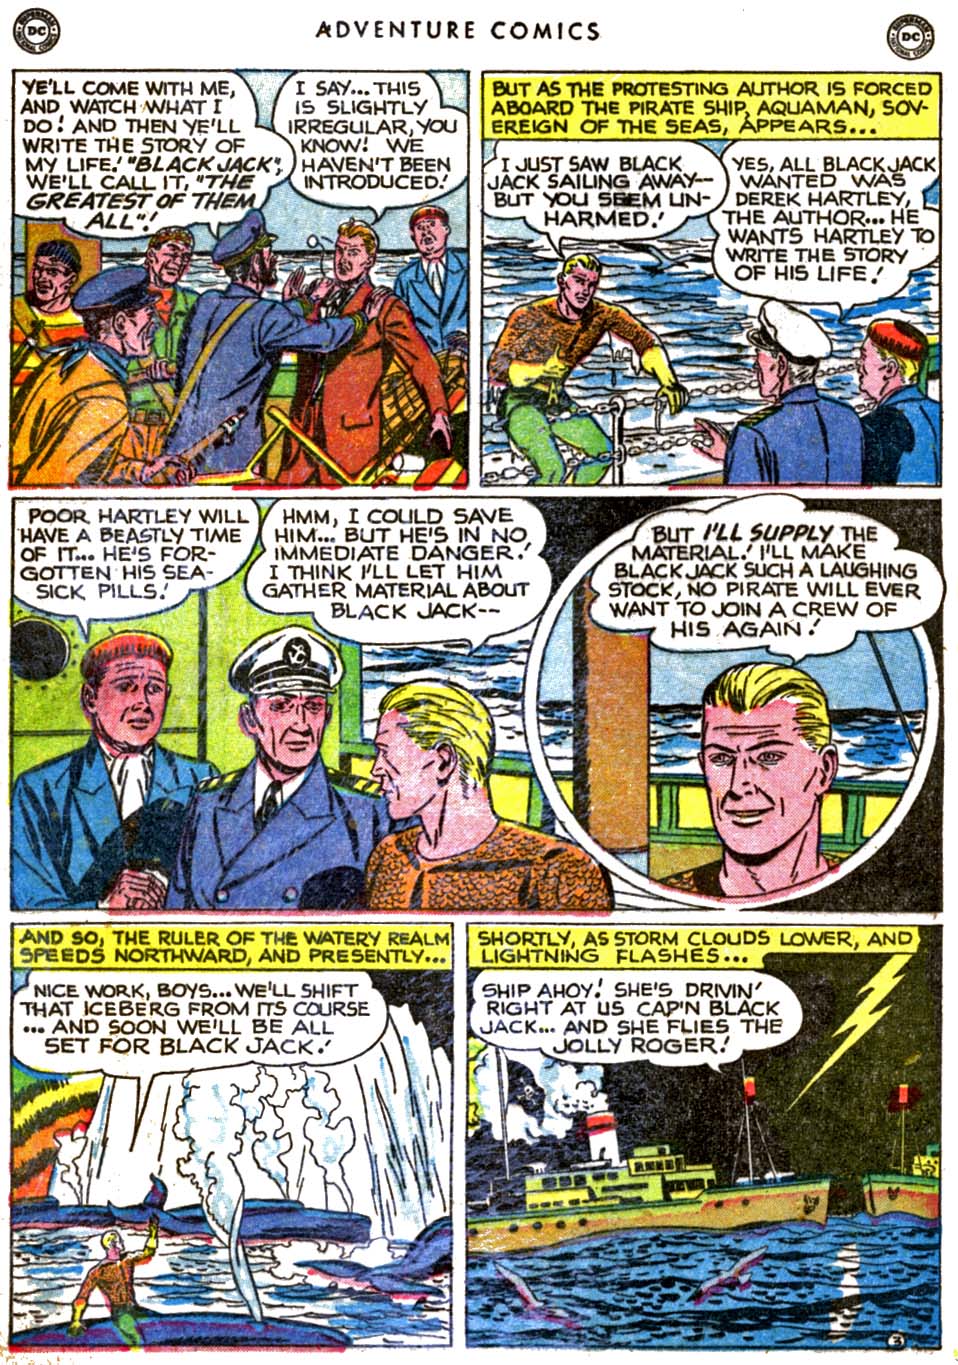 Adventure Comics (1938) 151 Page 18